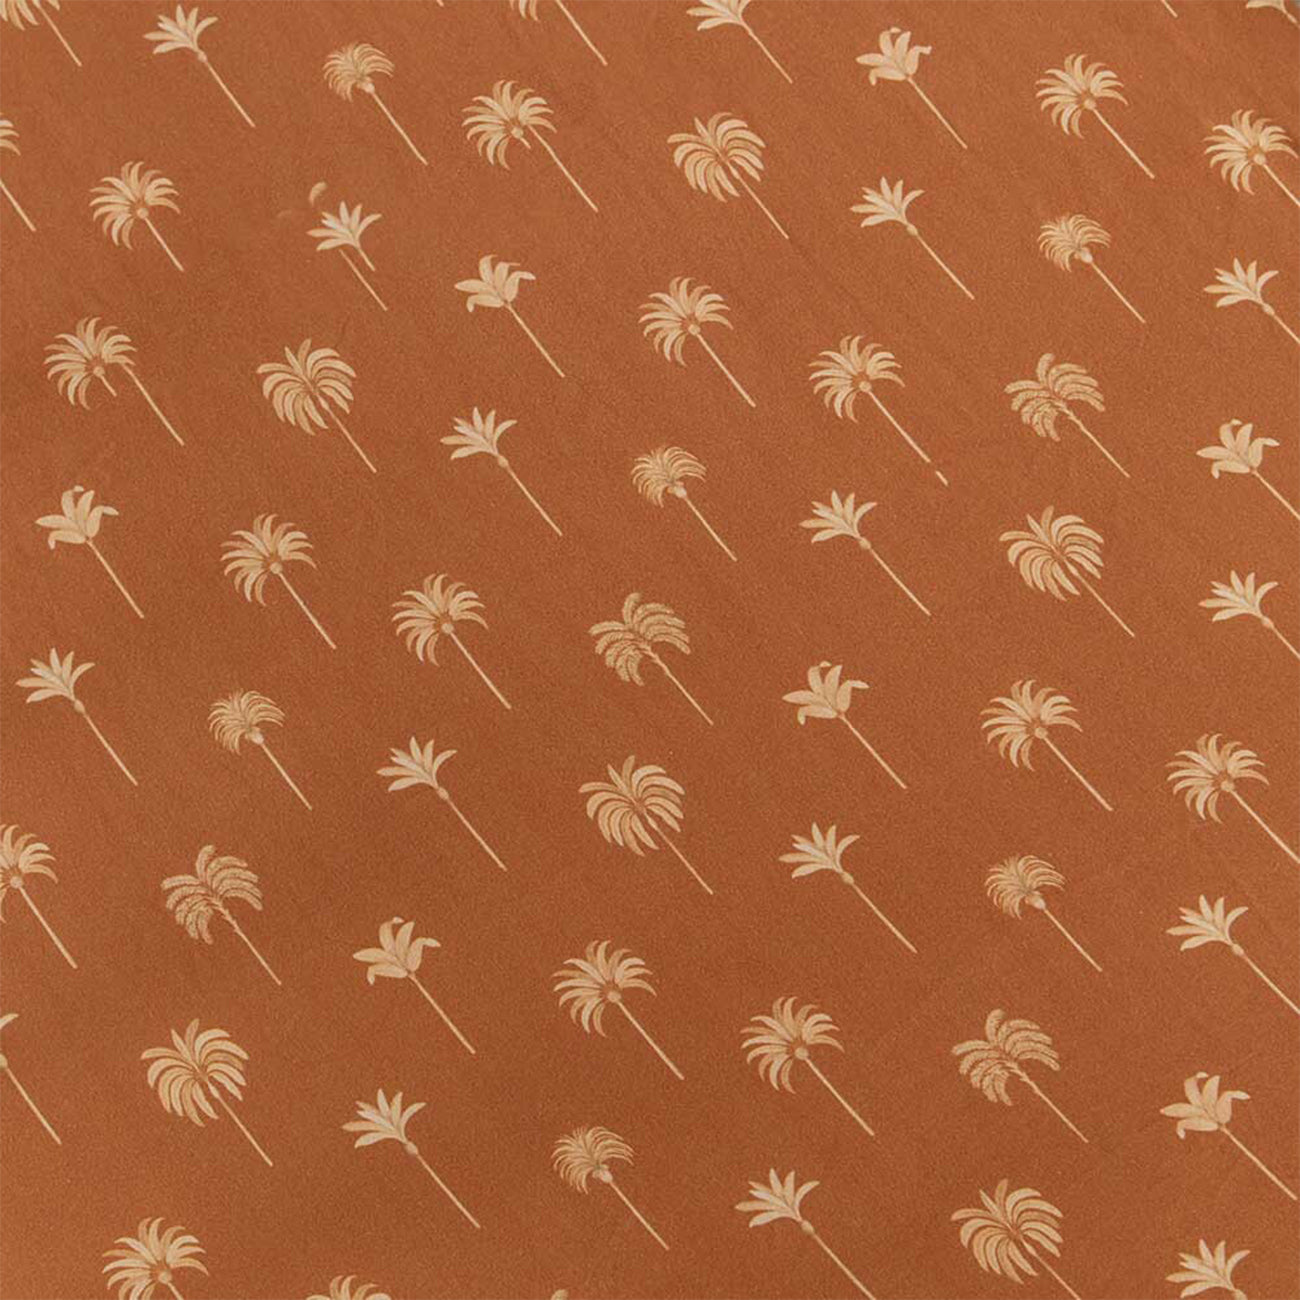 Bassinet Sheet / Change Pad Cover - Bronze Palm